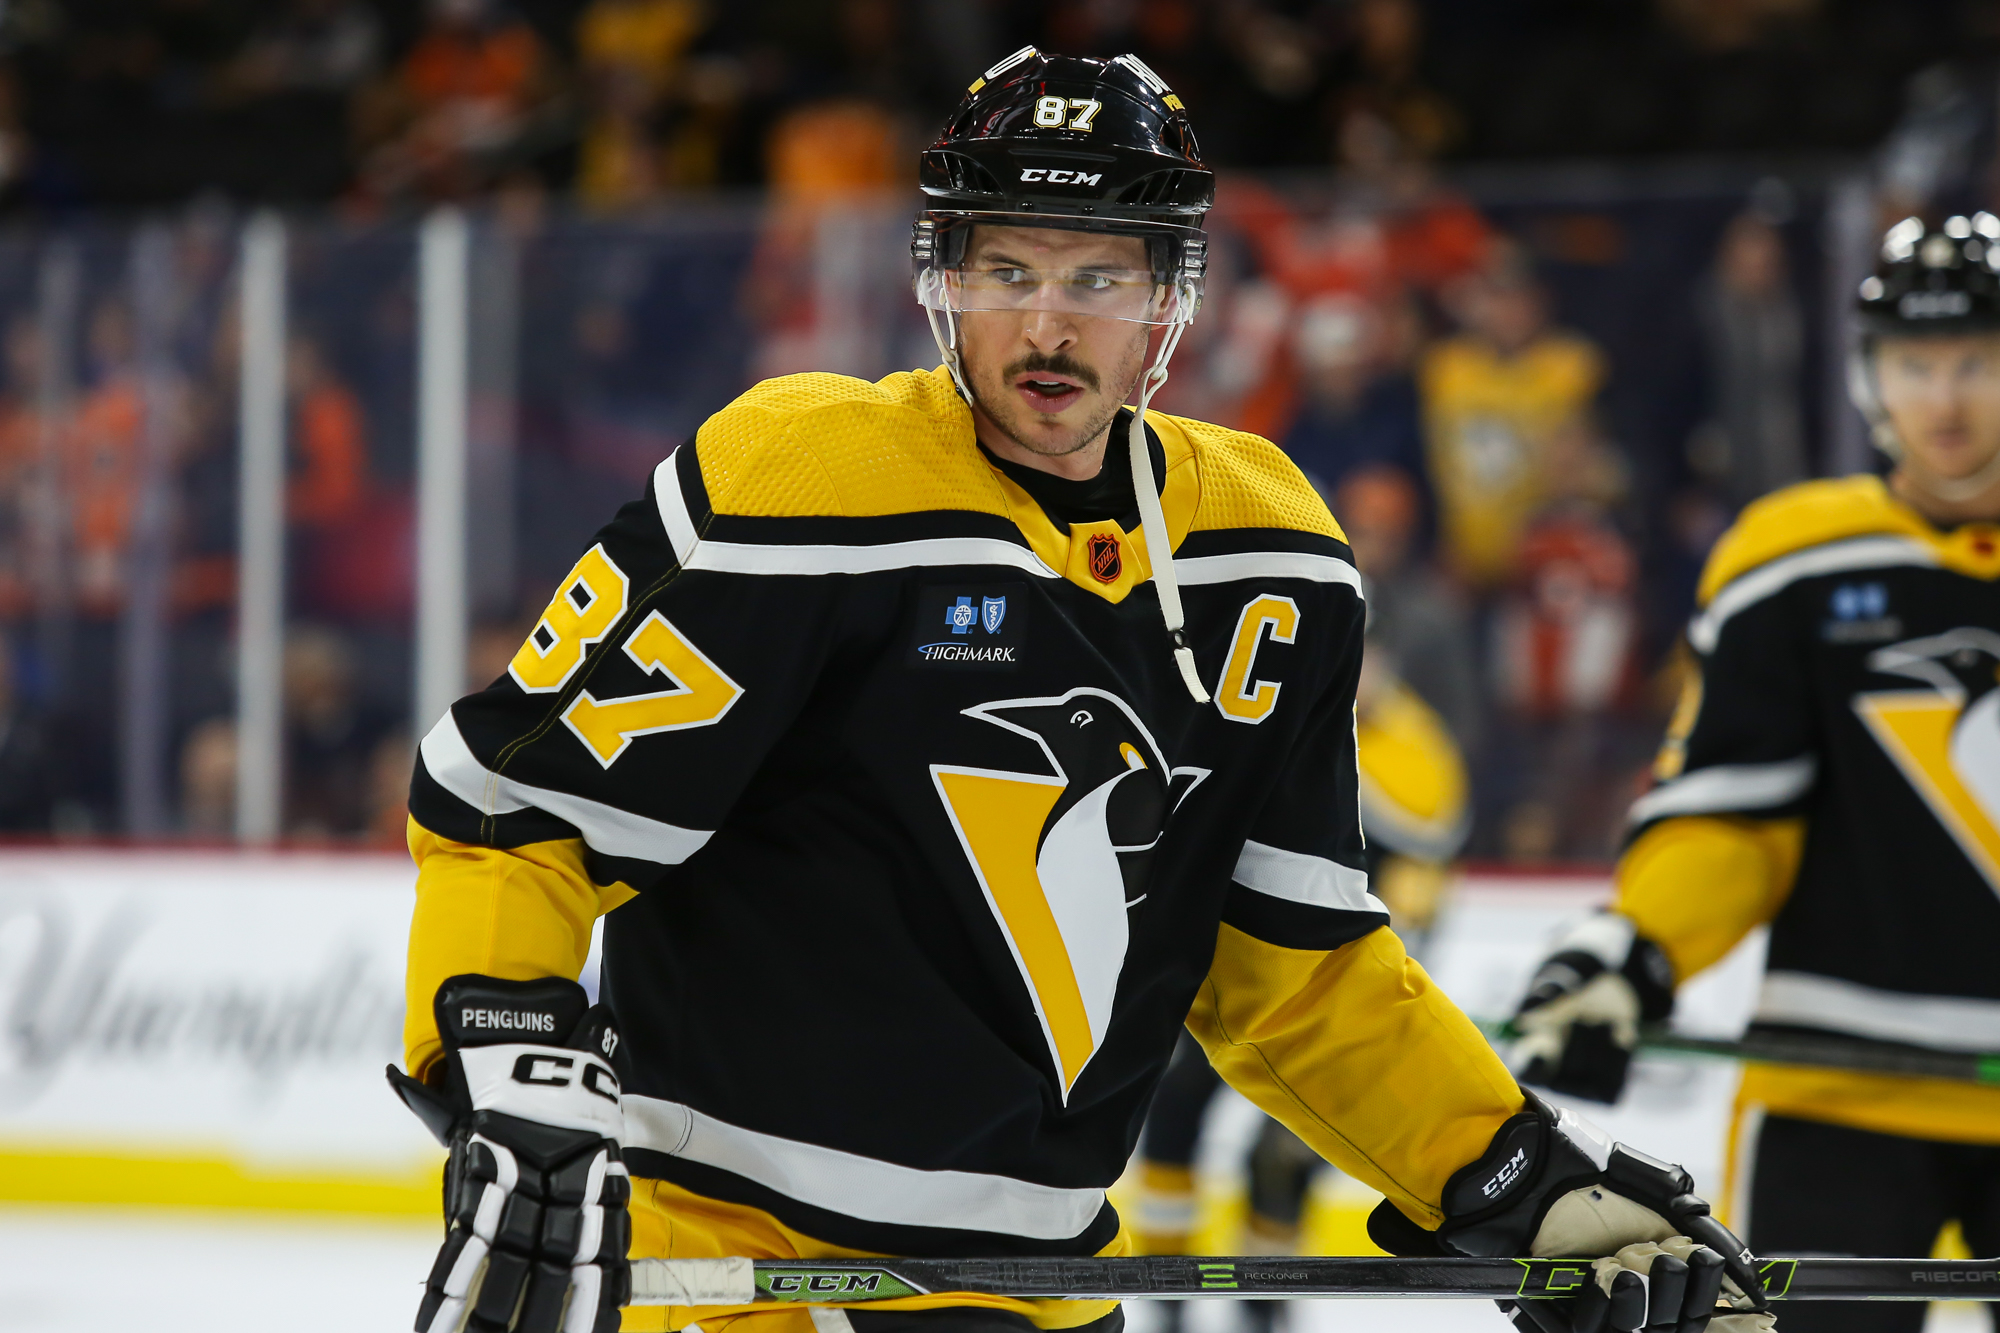  Penguins, Flyers 'reverse retro' jerseys